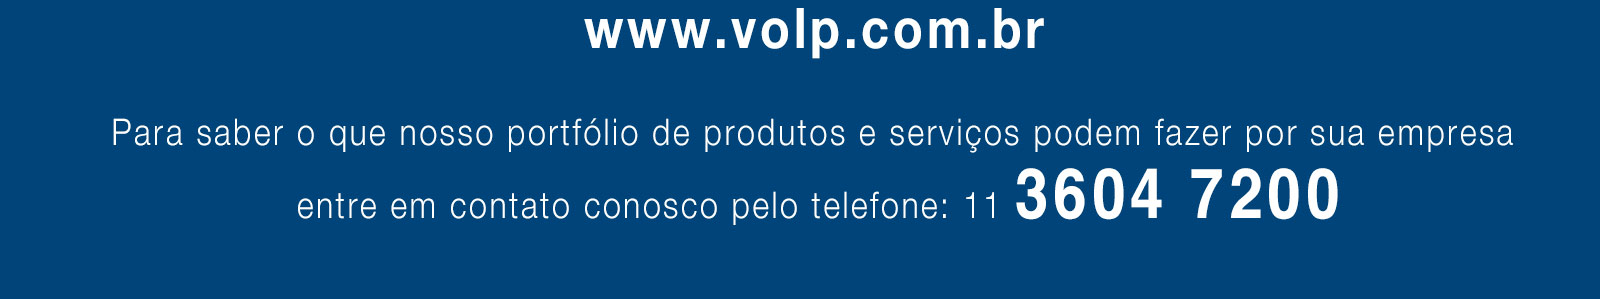 www.volp.com.br